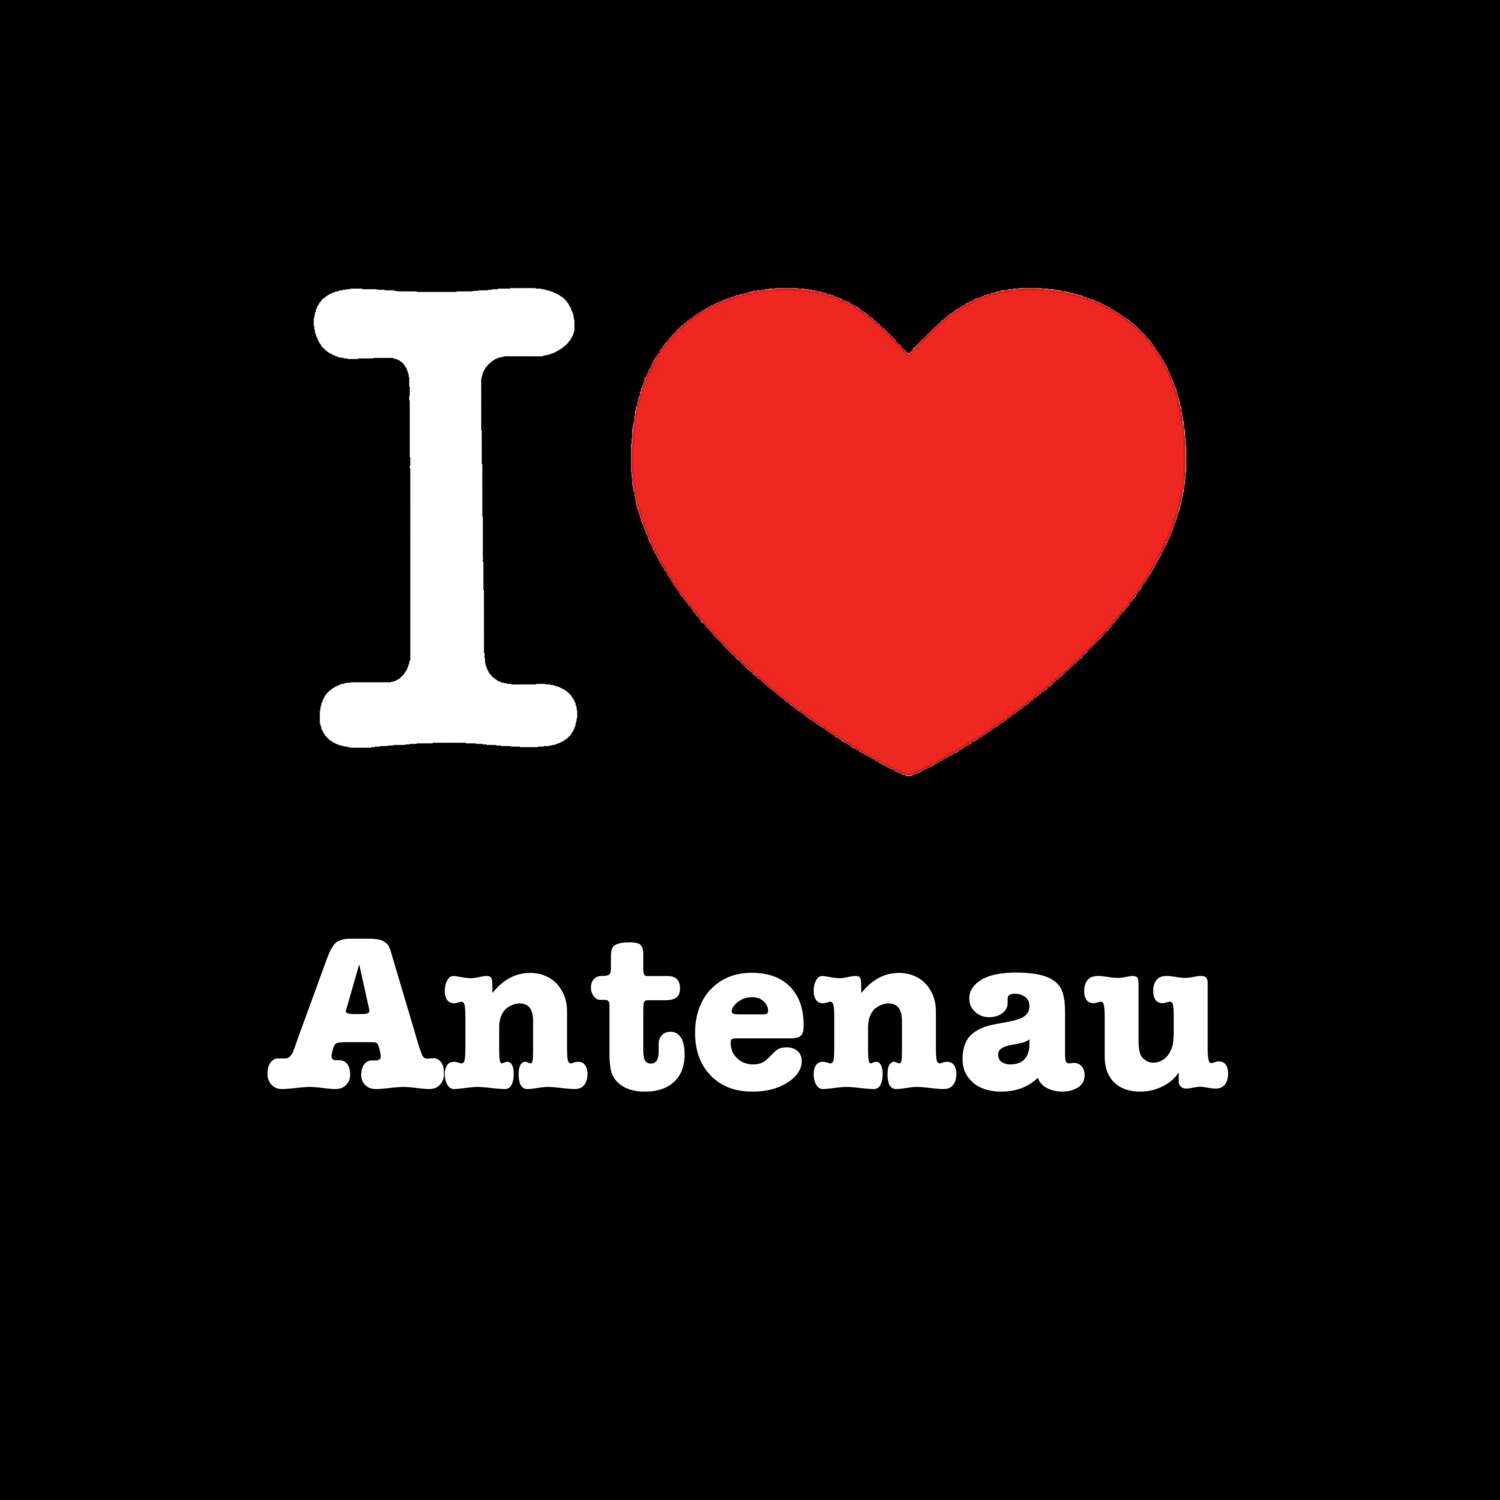 Antenau T-Shirt »I love«